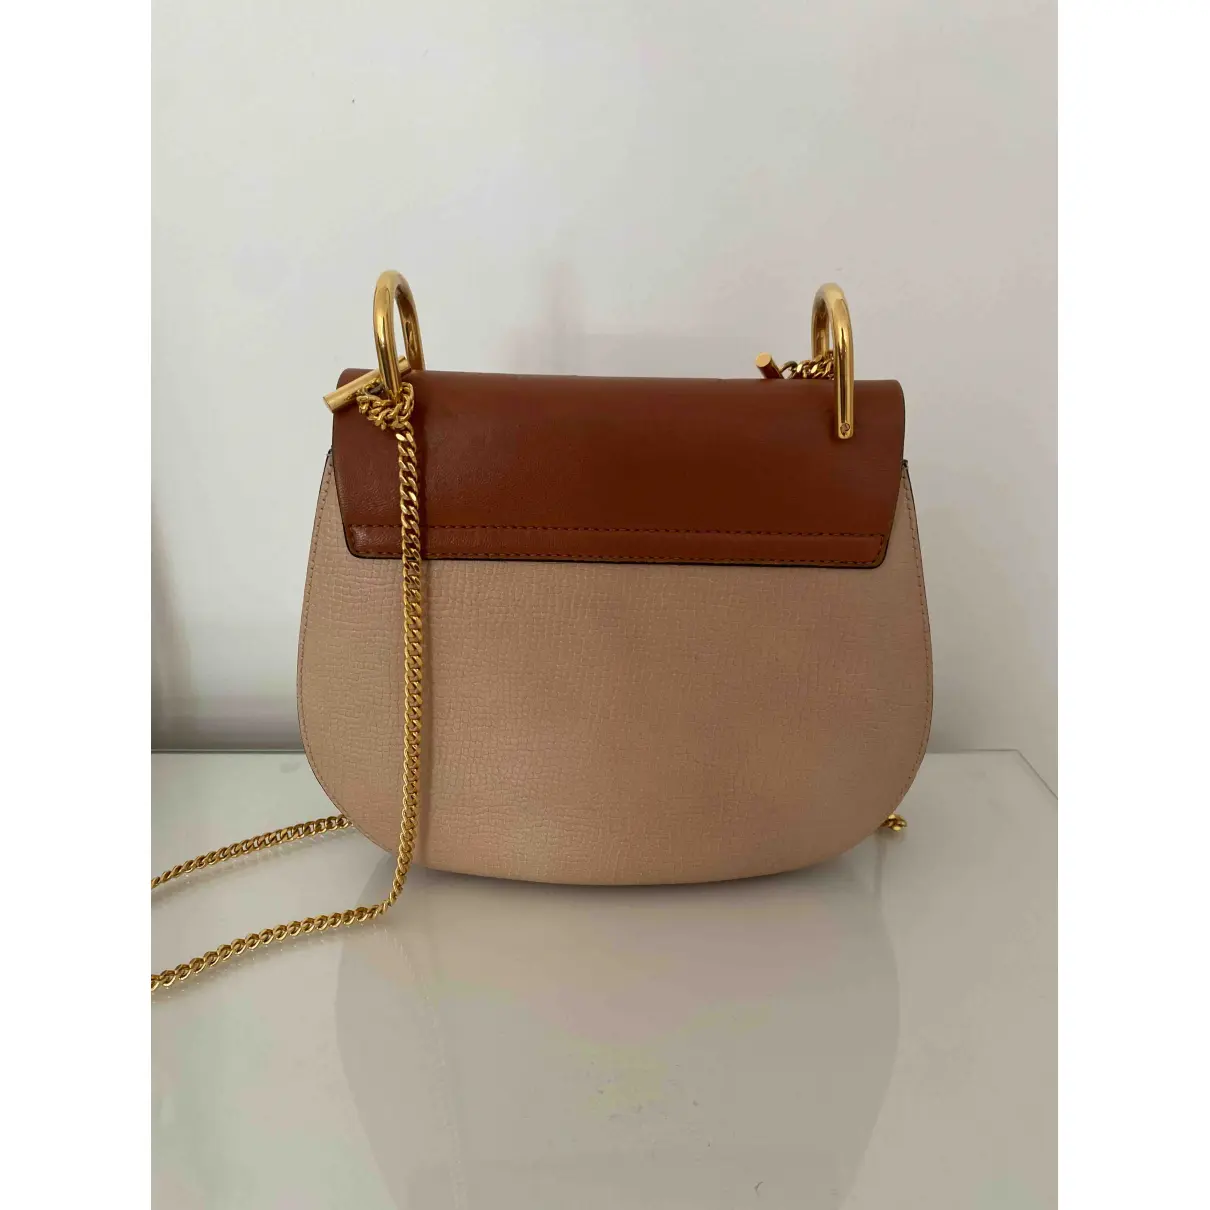 Buy Chloé Drew leather handbag online